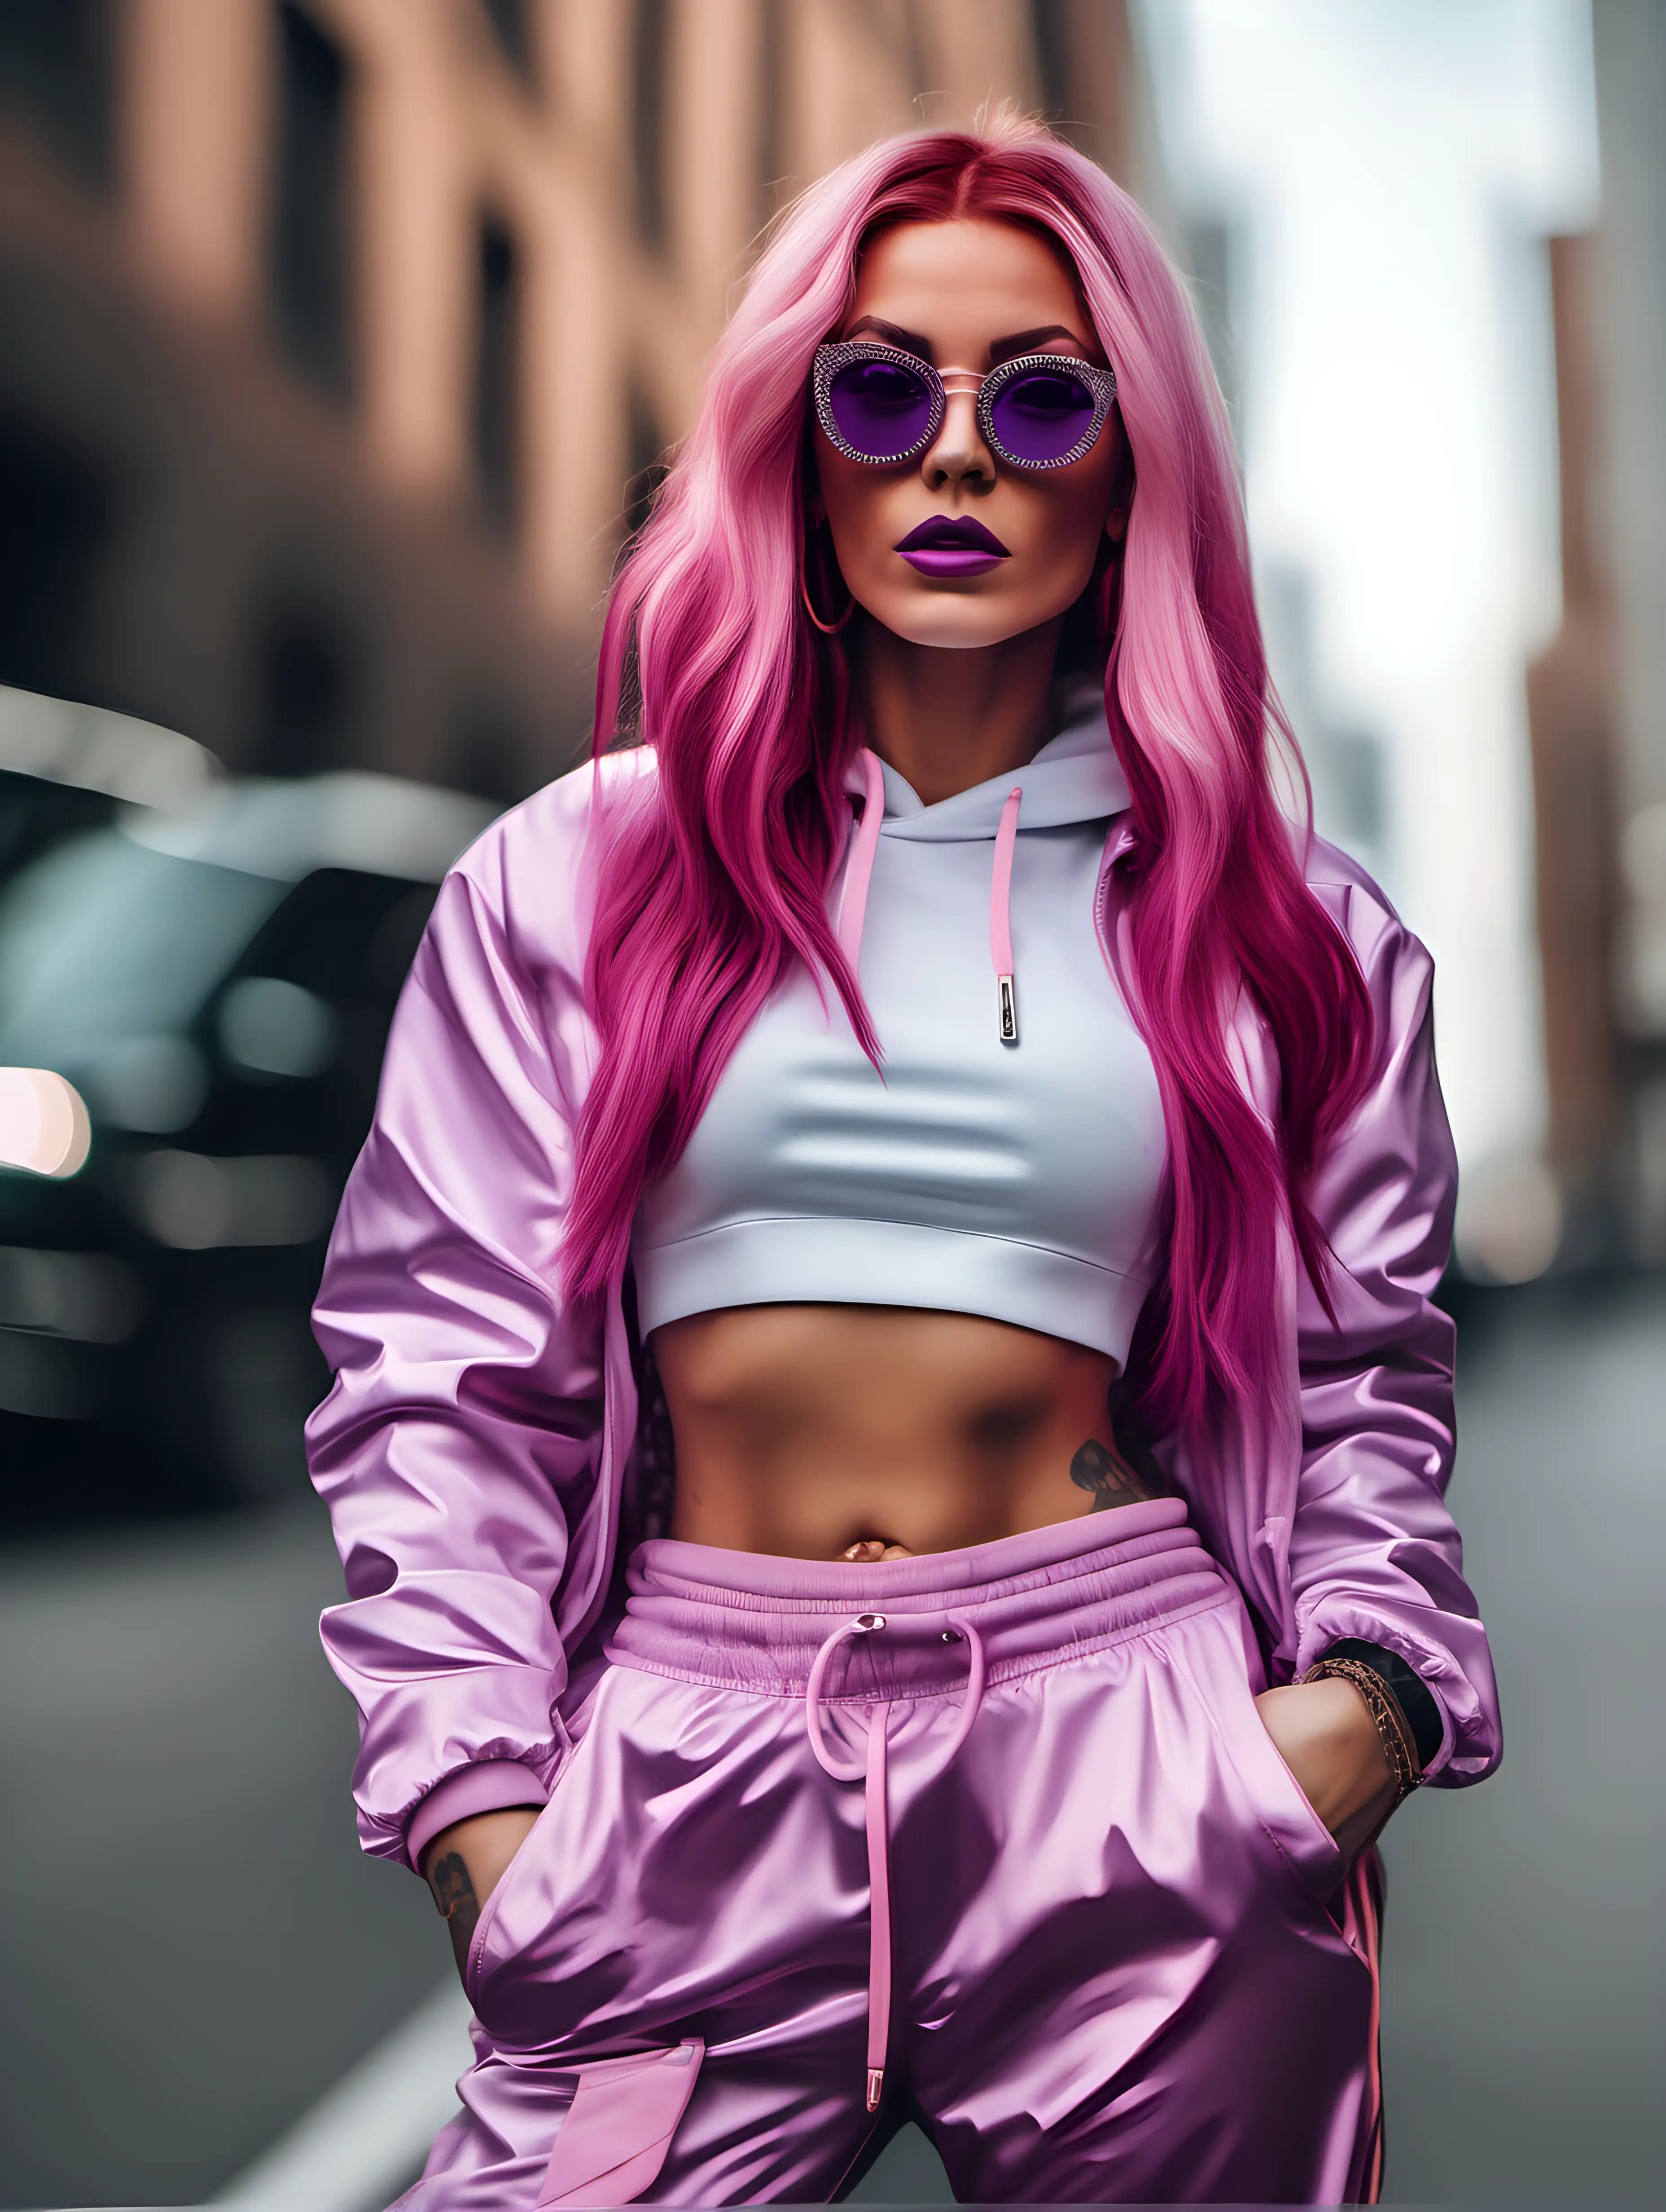 Stylish Urban Fashion Instagram Influencer in Sporty PinkViolet Ensemble